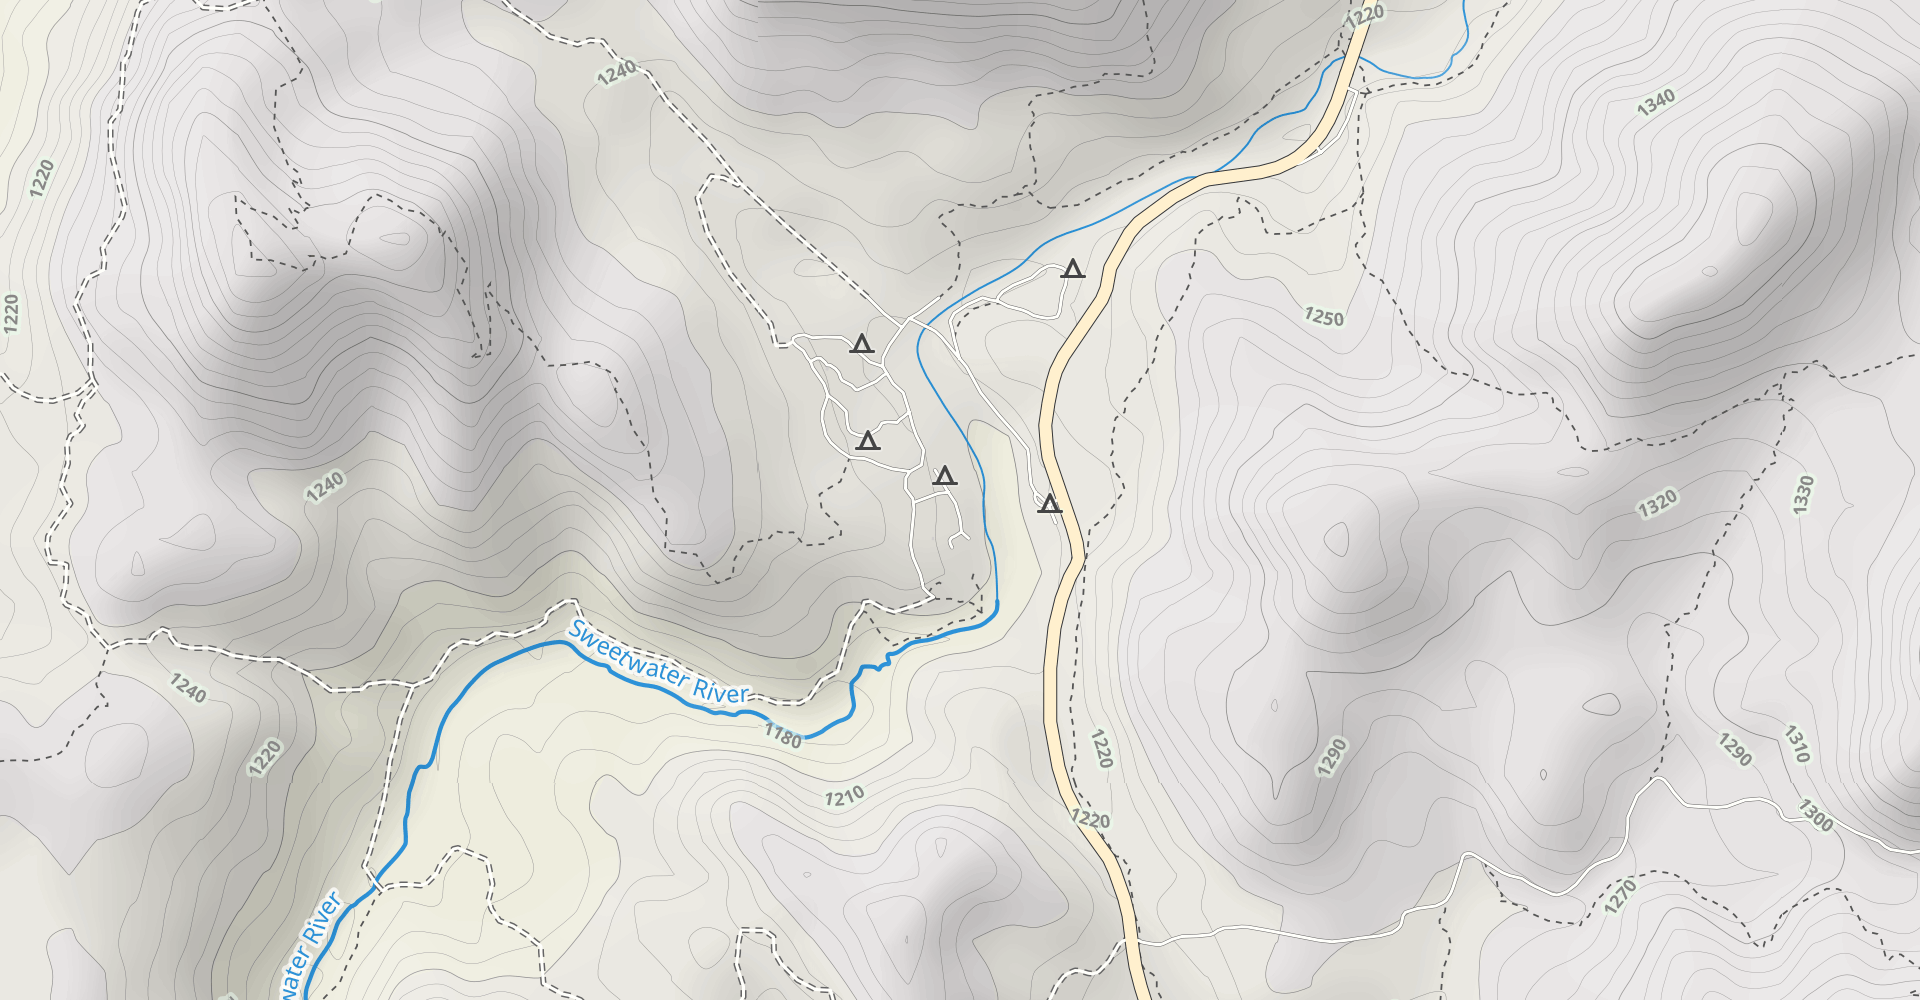 Cuyamaca Peak via Arroyo Secco and West Mesa Trail